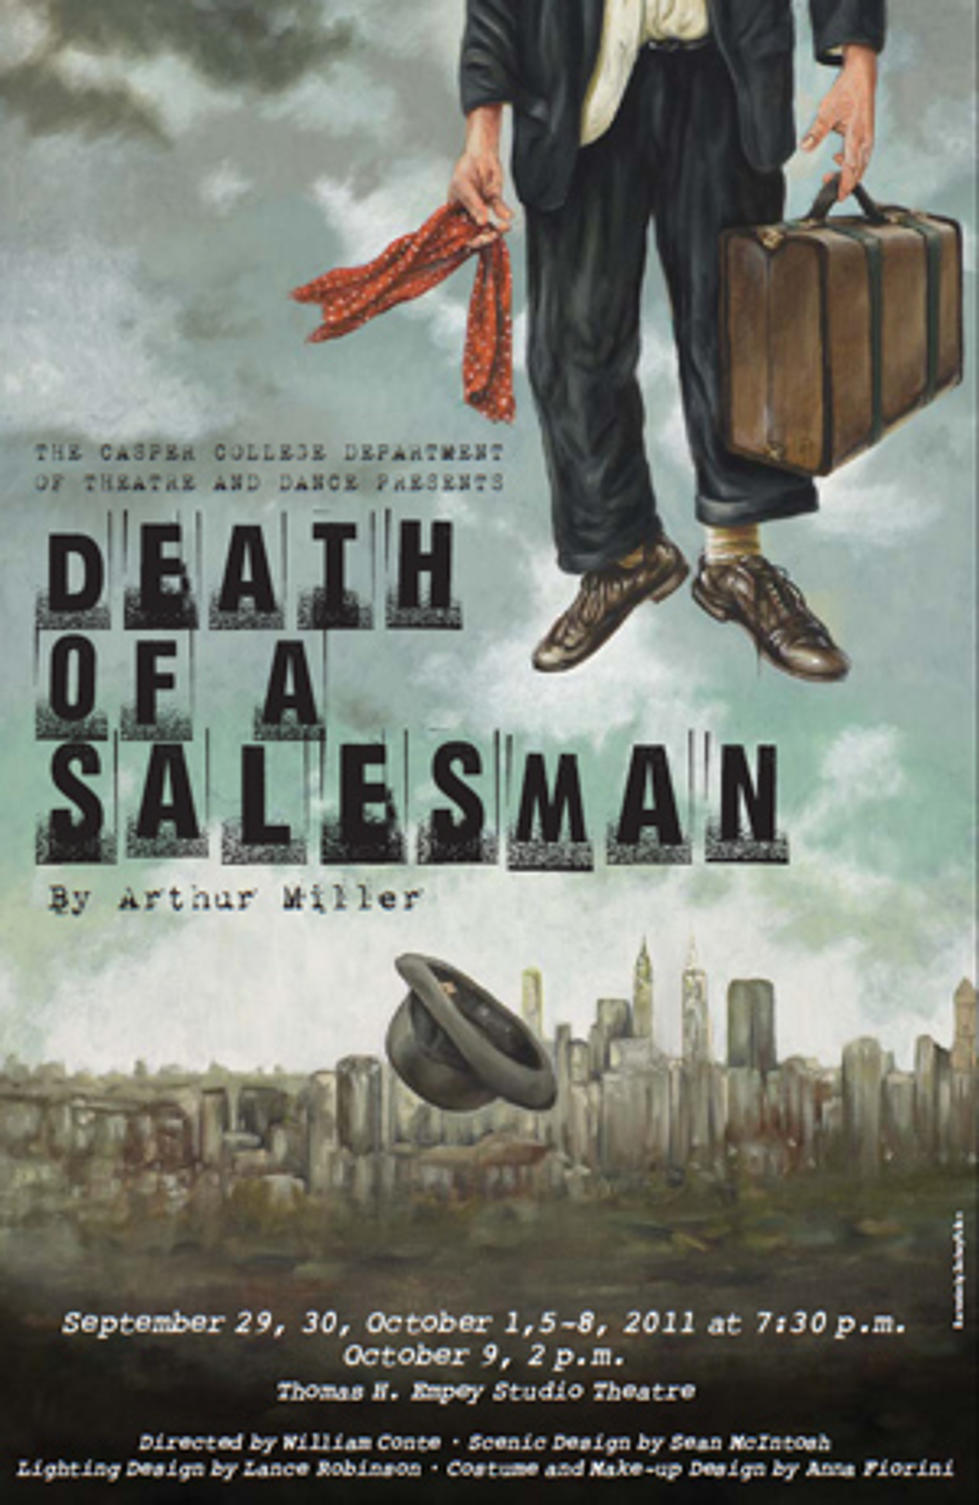 Casper’s John Jorgensen Takes On “Death Of A Salesman”